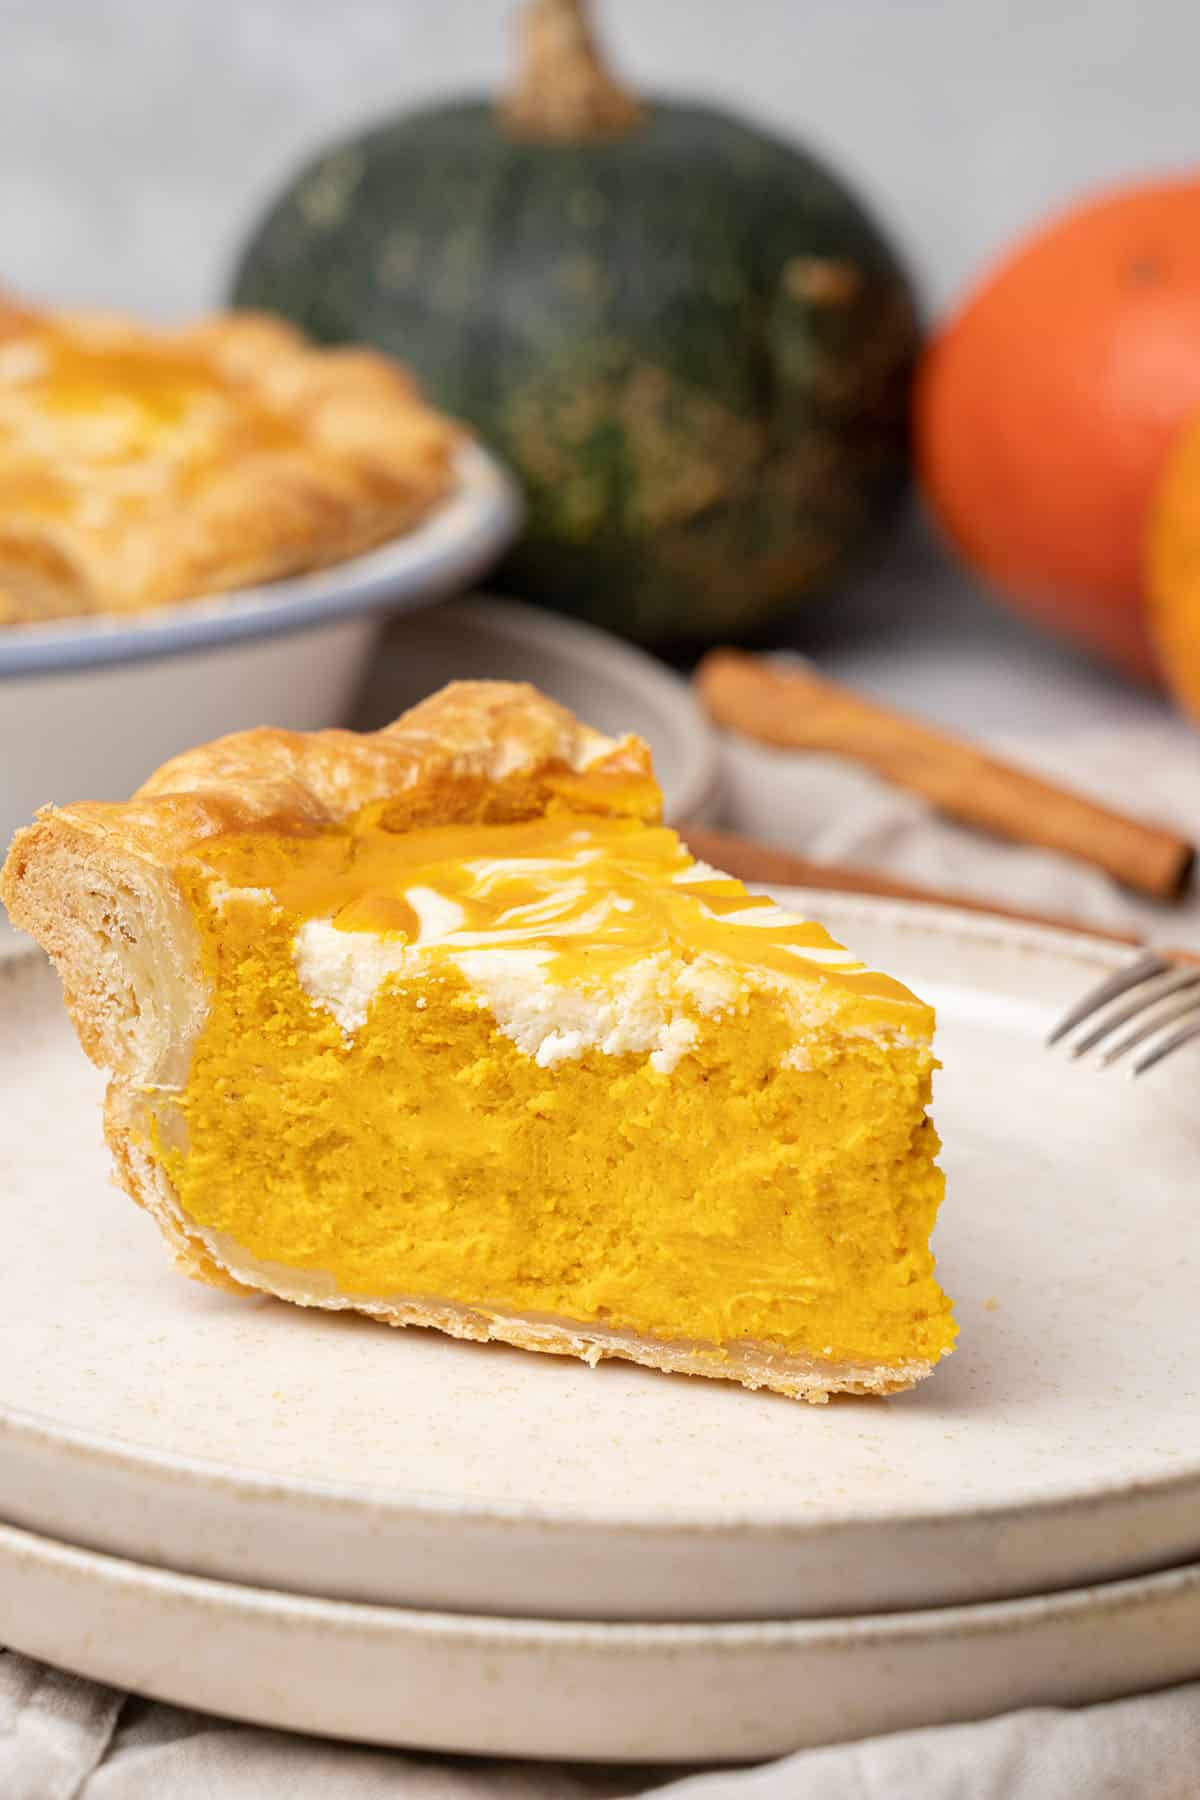 a slice of Pumpkin cream cheese pie on a plate.